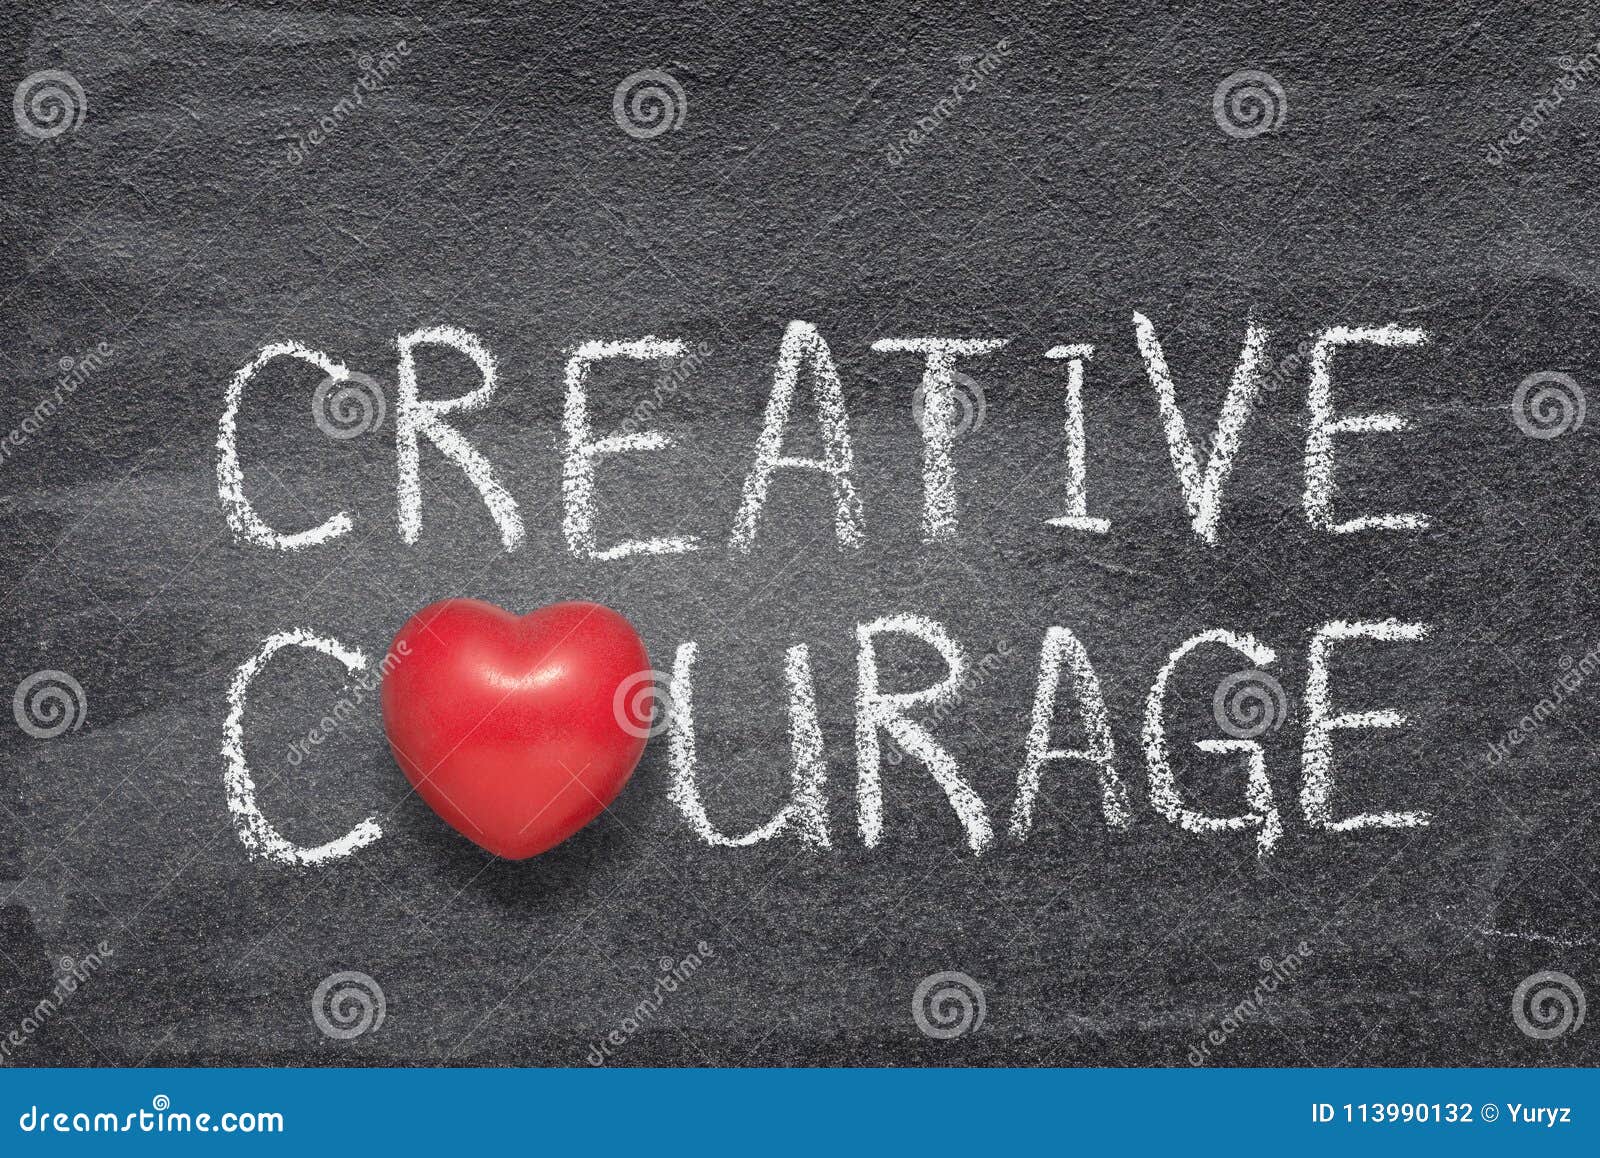 Creative courage heart stock photo. Image of creativity - 113990132